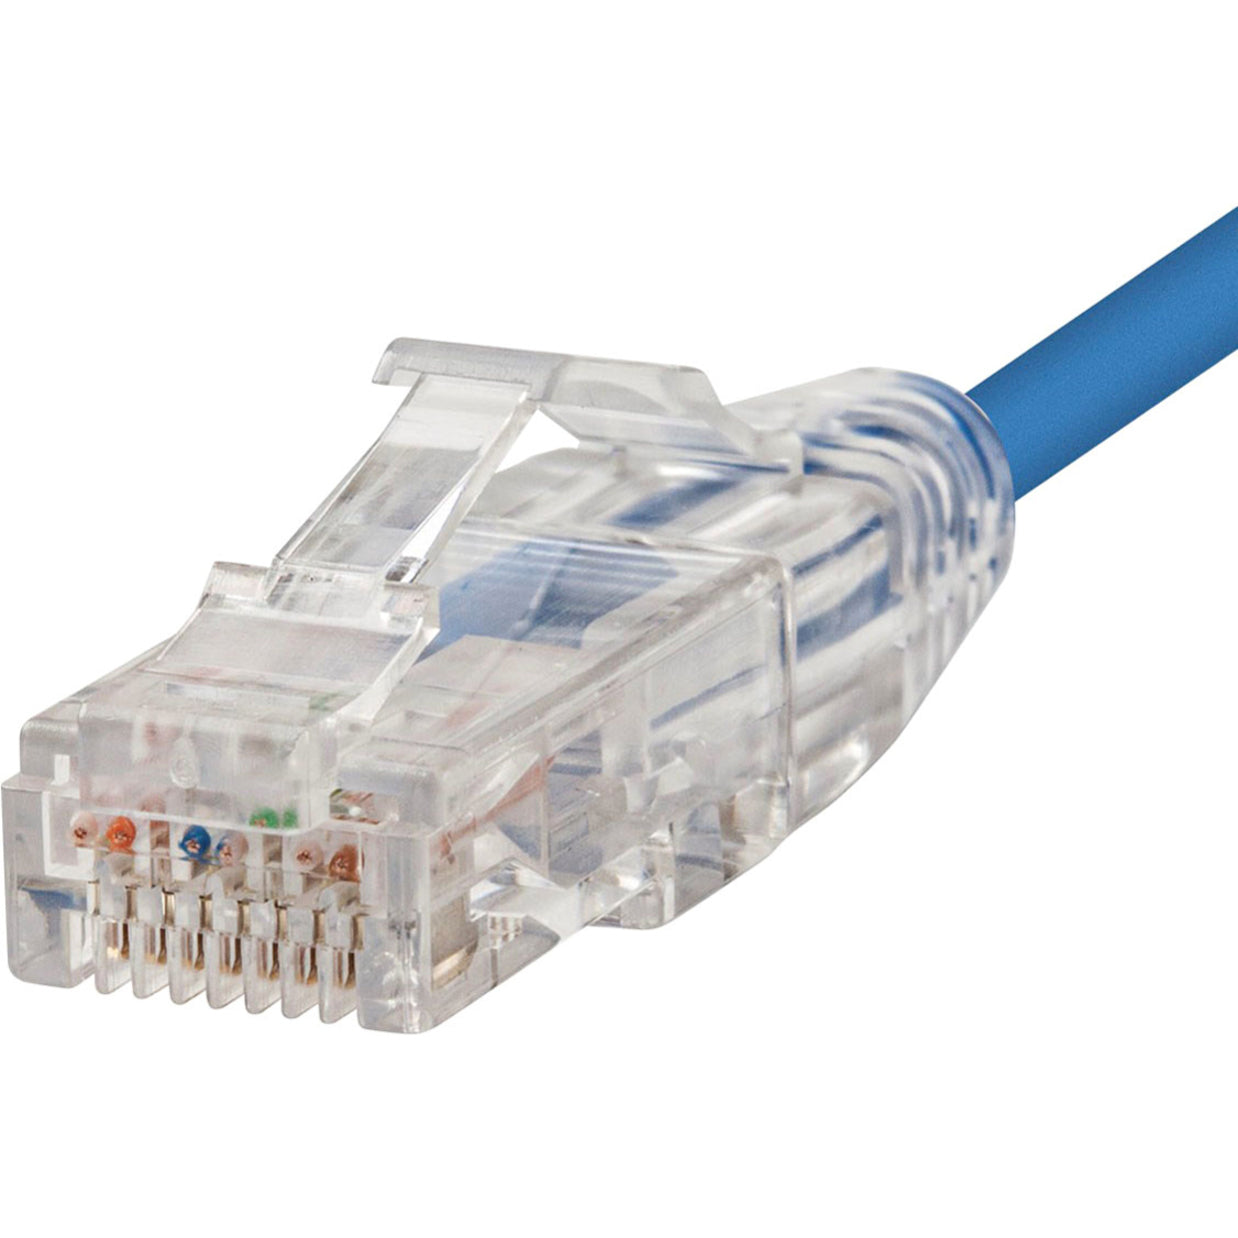 Monoprice 13548 SlimRun Cat6 28AWG UTP Ethernet Network Cable, 14ft Blue, Flexible, Snagless